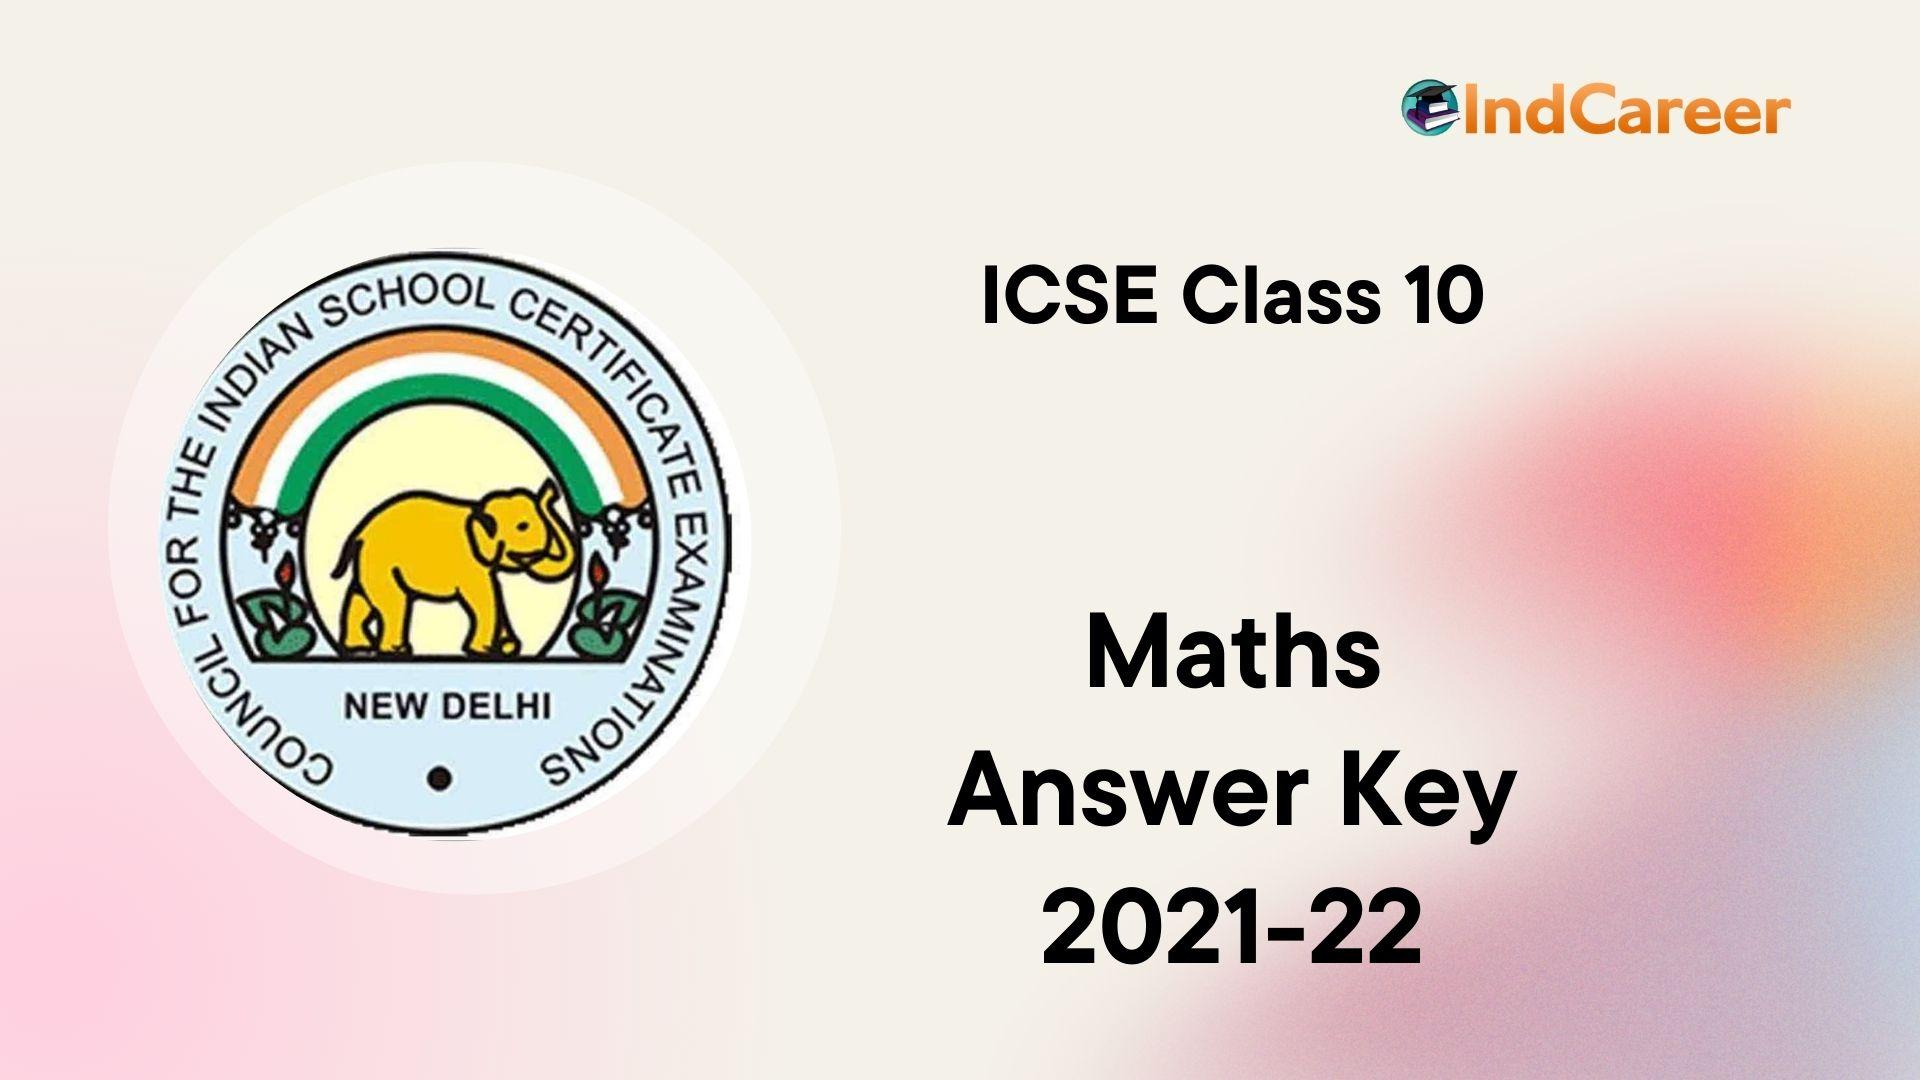 icse-class-10-maths-answer-key-2021-22-indcareer-schools